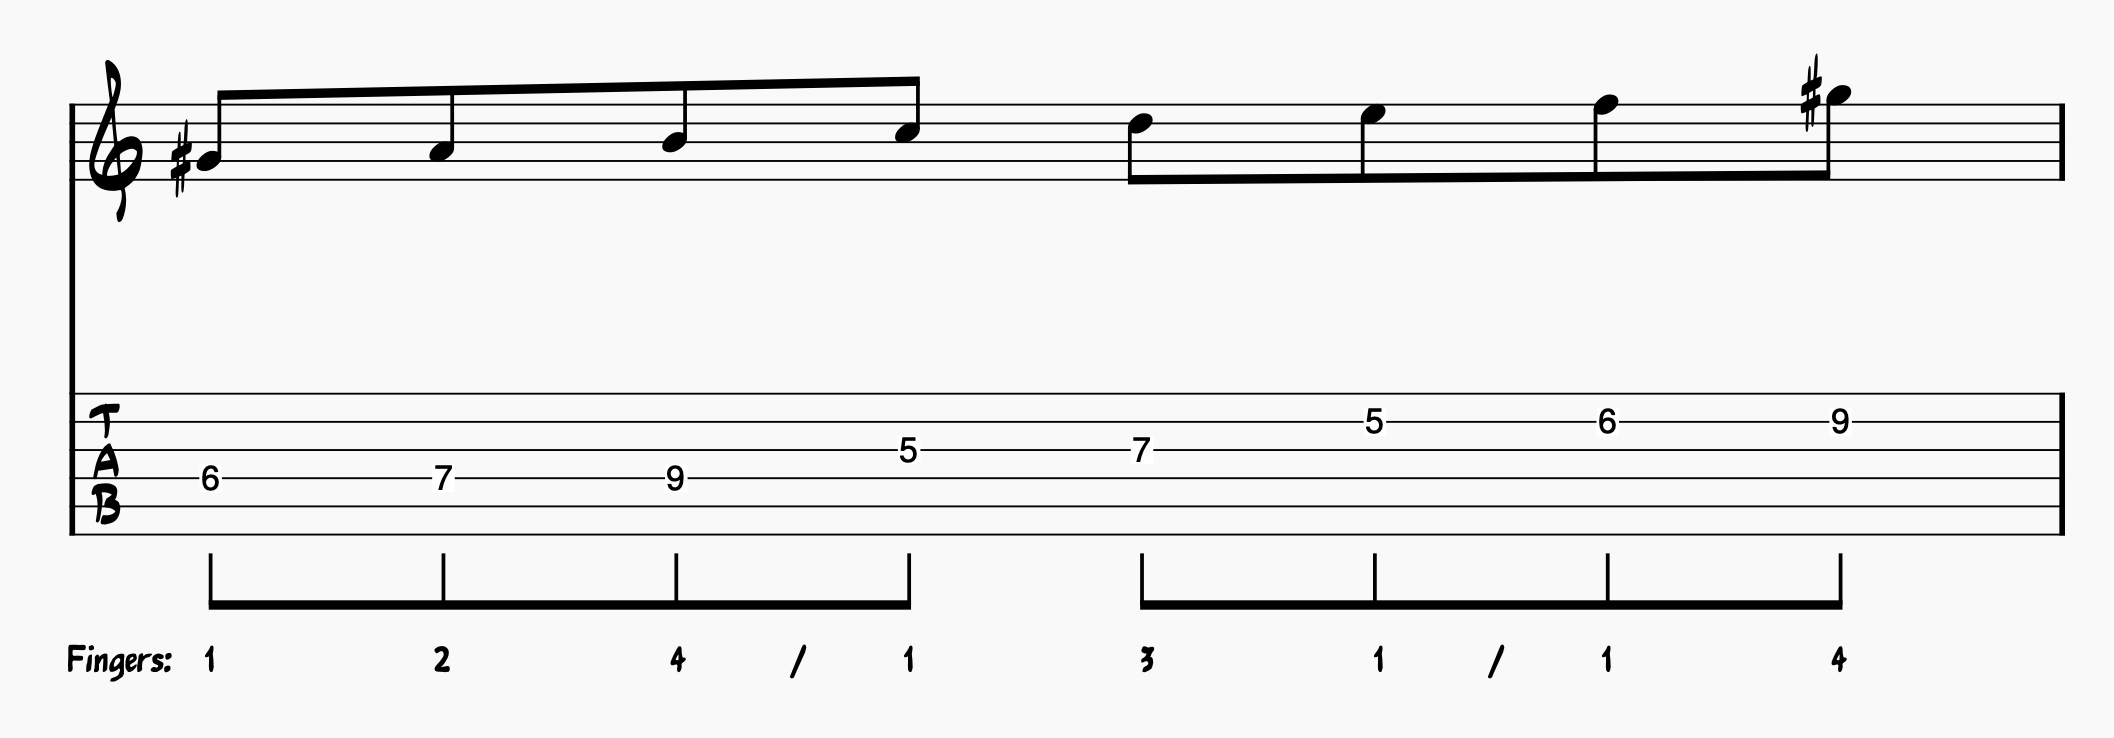 B Super-Locrian bb7; the 7th mode of the C harmonic minor scale